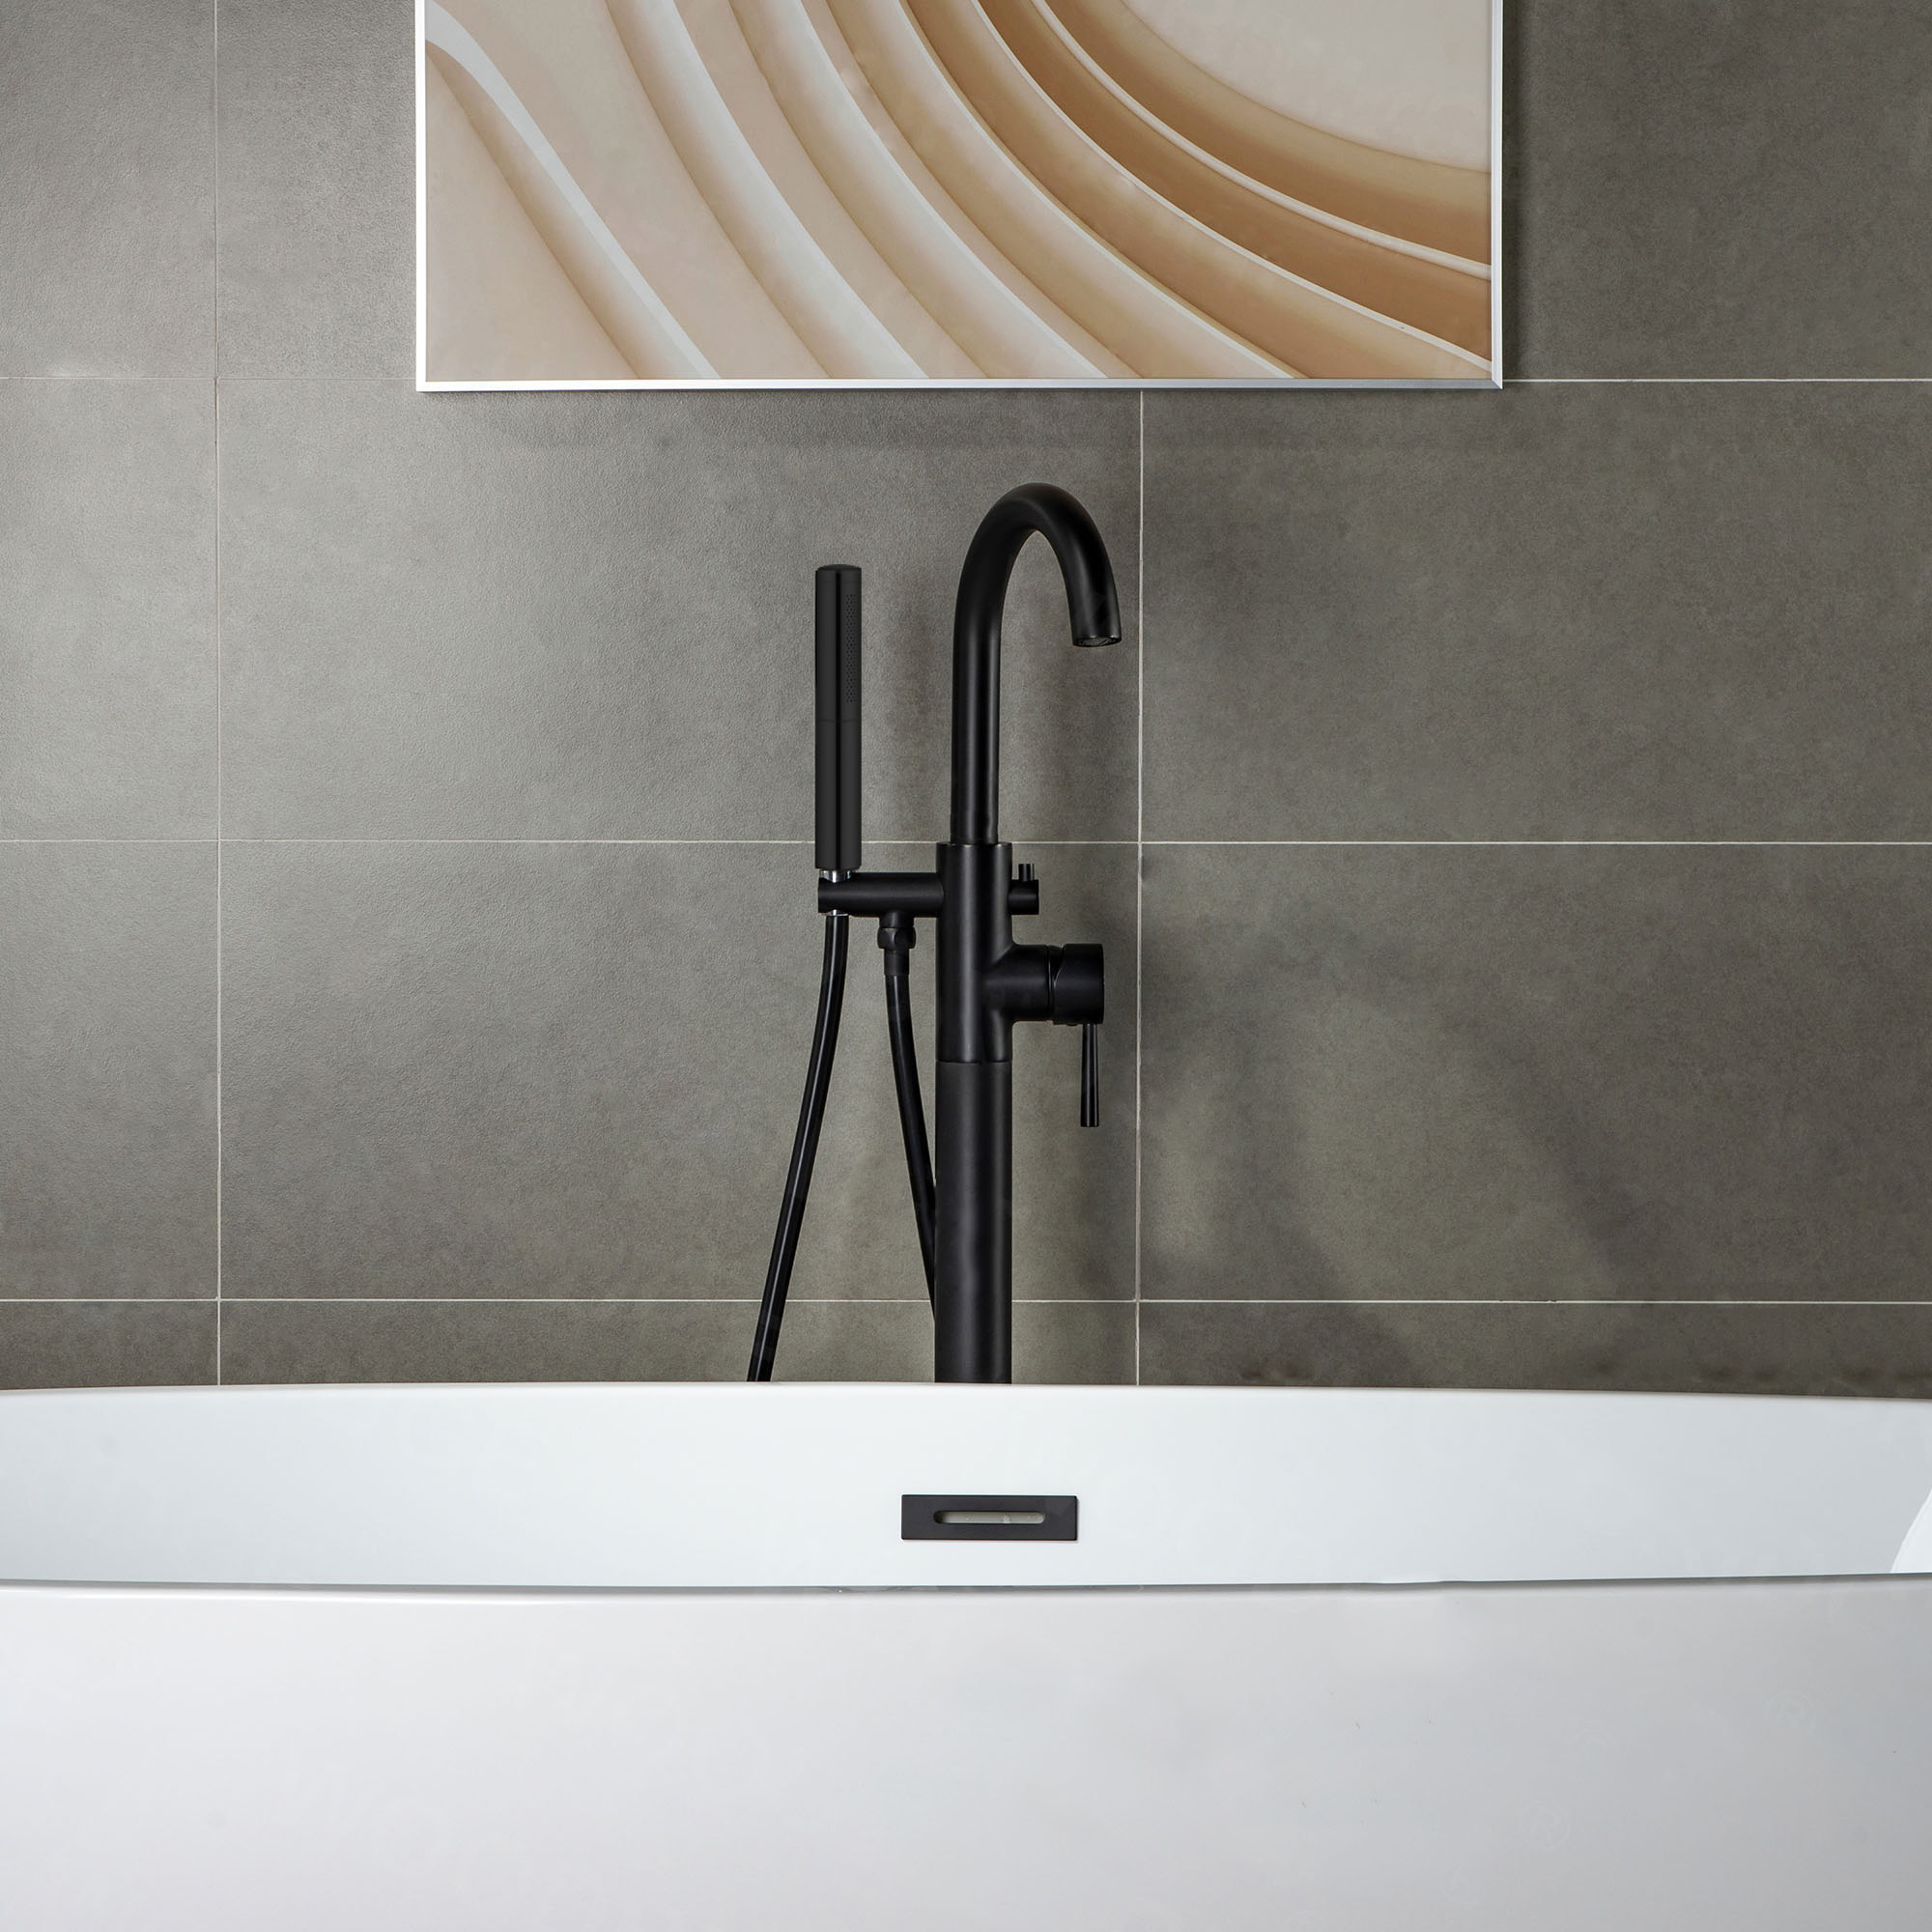  WOODBRIDGE F0006MBDR Contemporary Single Handle Floor Mount Freestanding Tub Filler Faucet with Hand shower in Matte Black Finish._14892